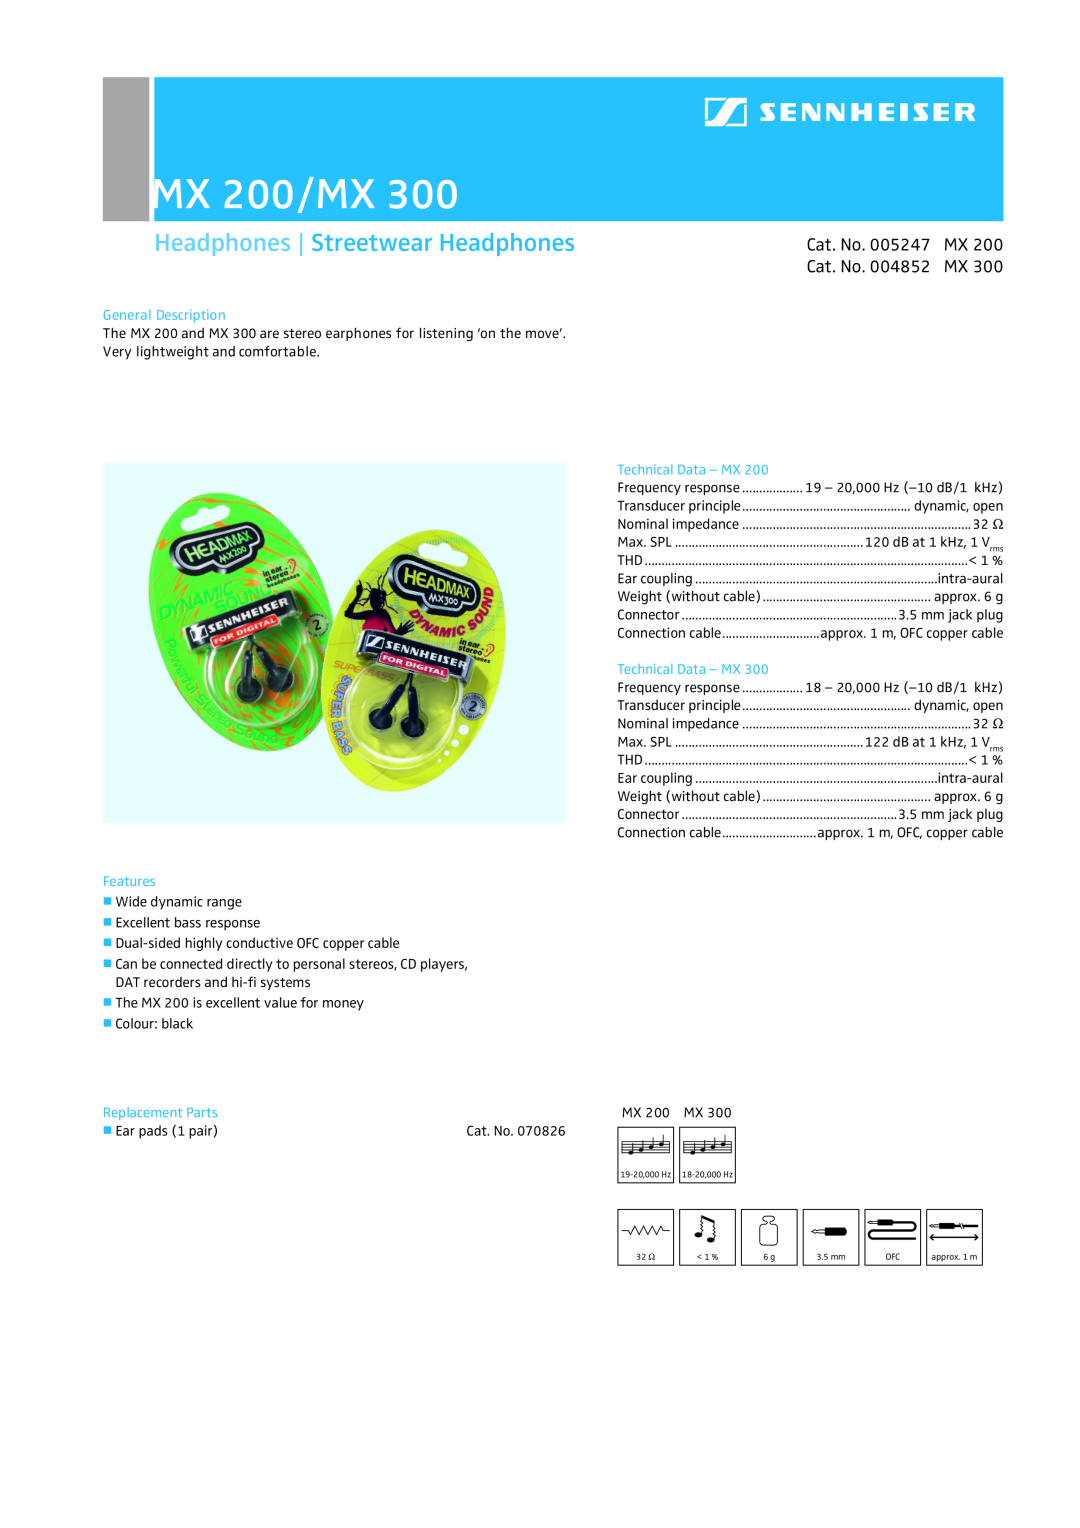 Sennheiser manual MX 200/MX, Headphones Streetwear Headphones, previous page, Overview, General Description, Features 